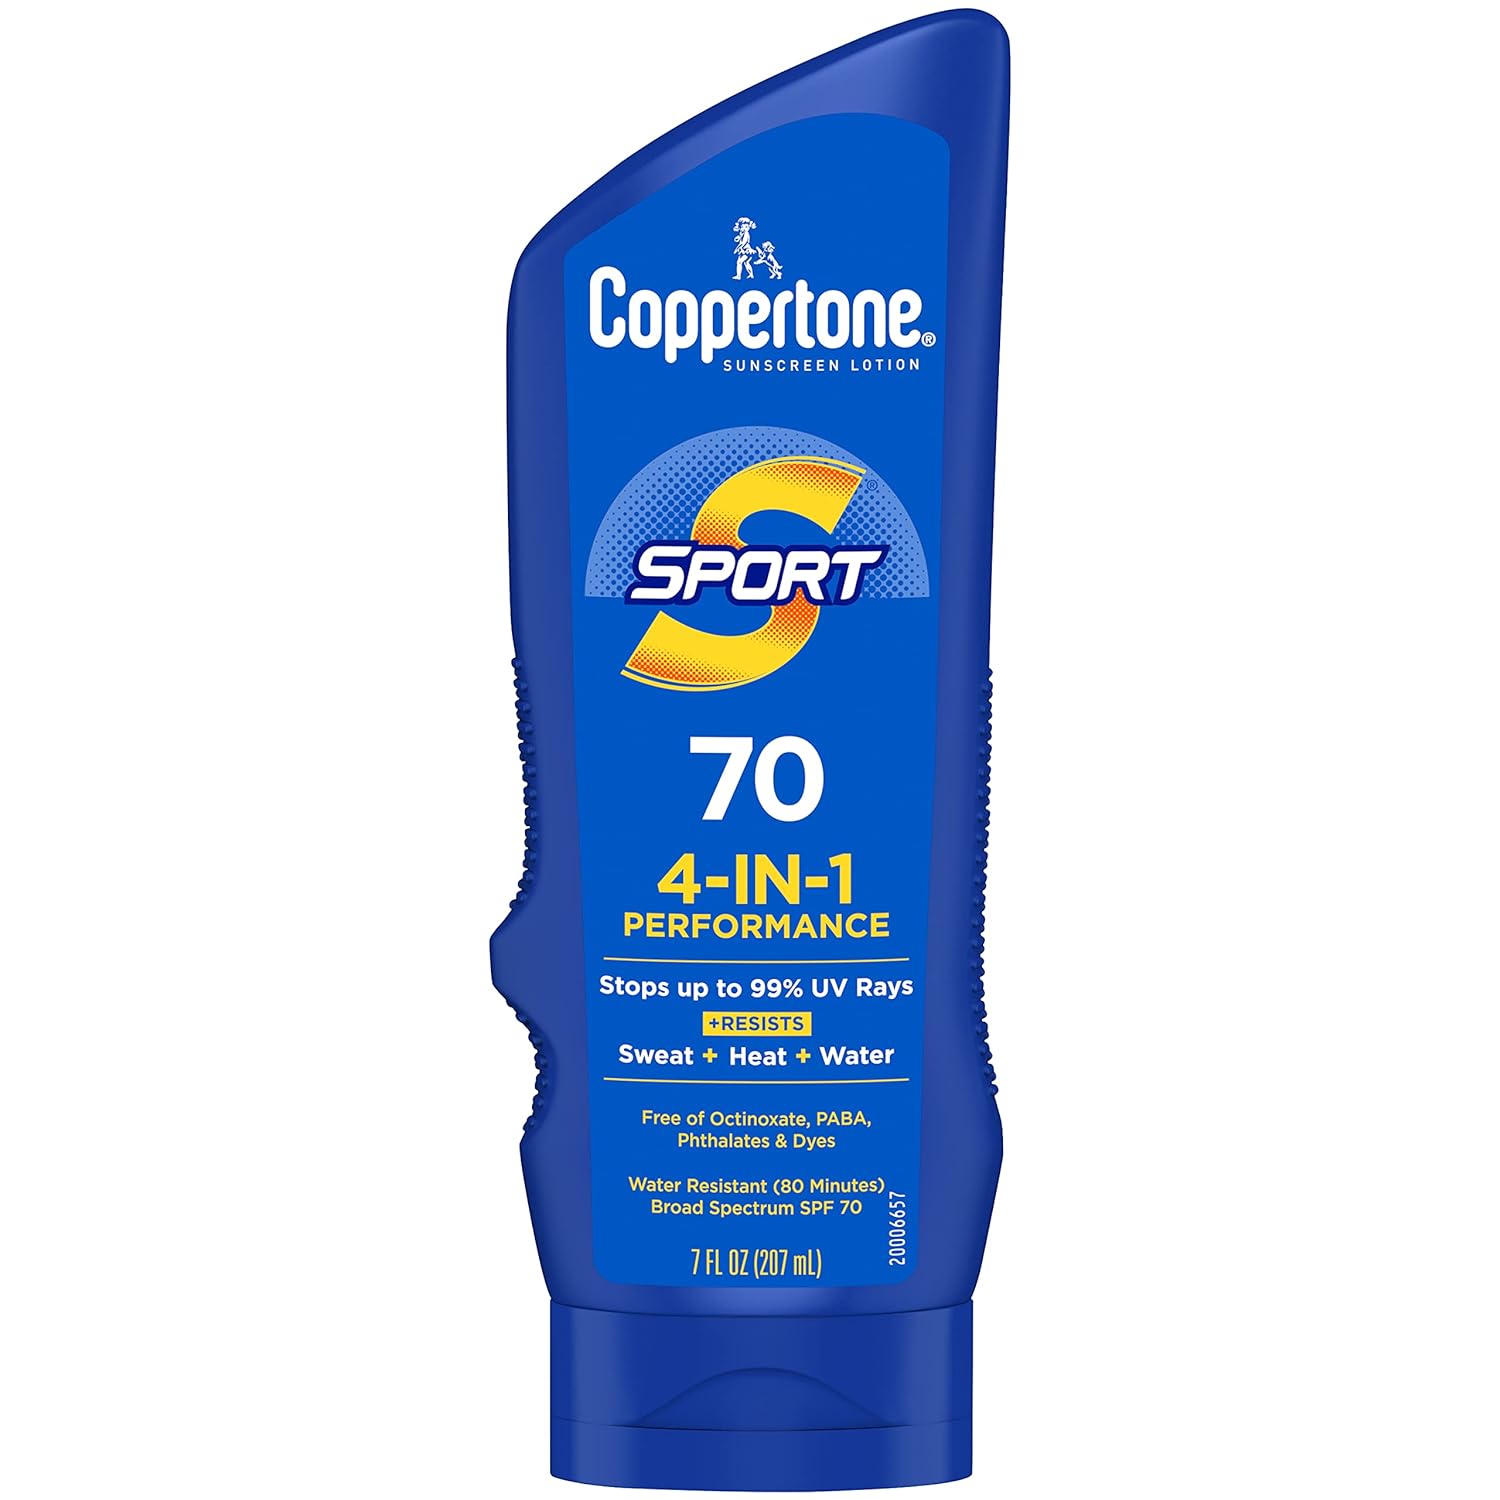 Coppertone SPORT Sunscreen SPF 70 Lotion, Water Resistant Sunscreen, Body Sunscreen Lotion, 7 Fl Oz